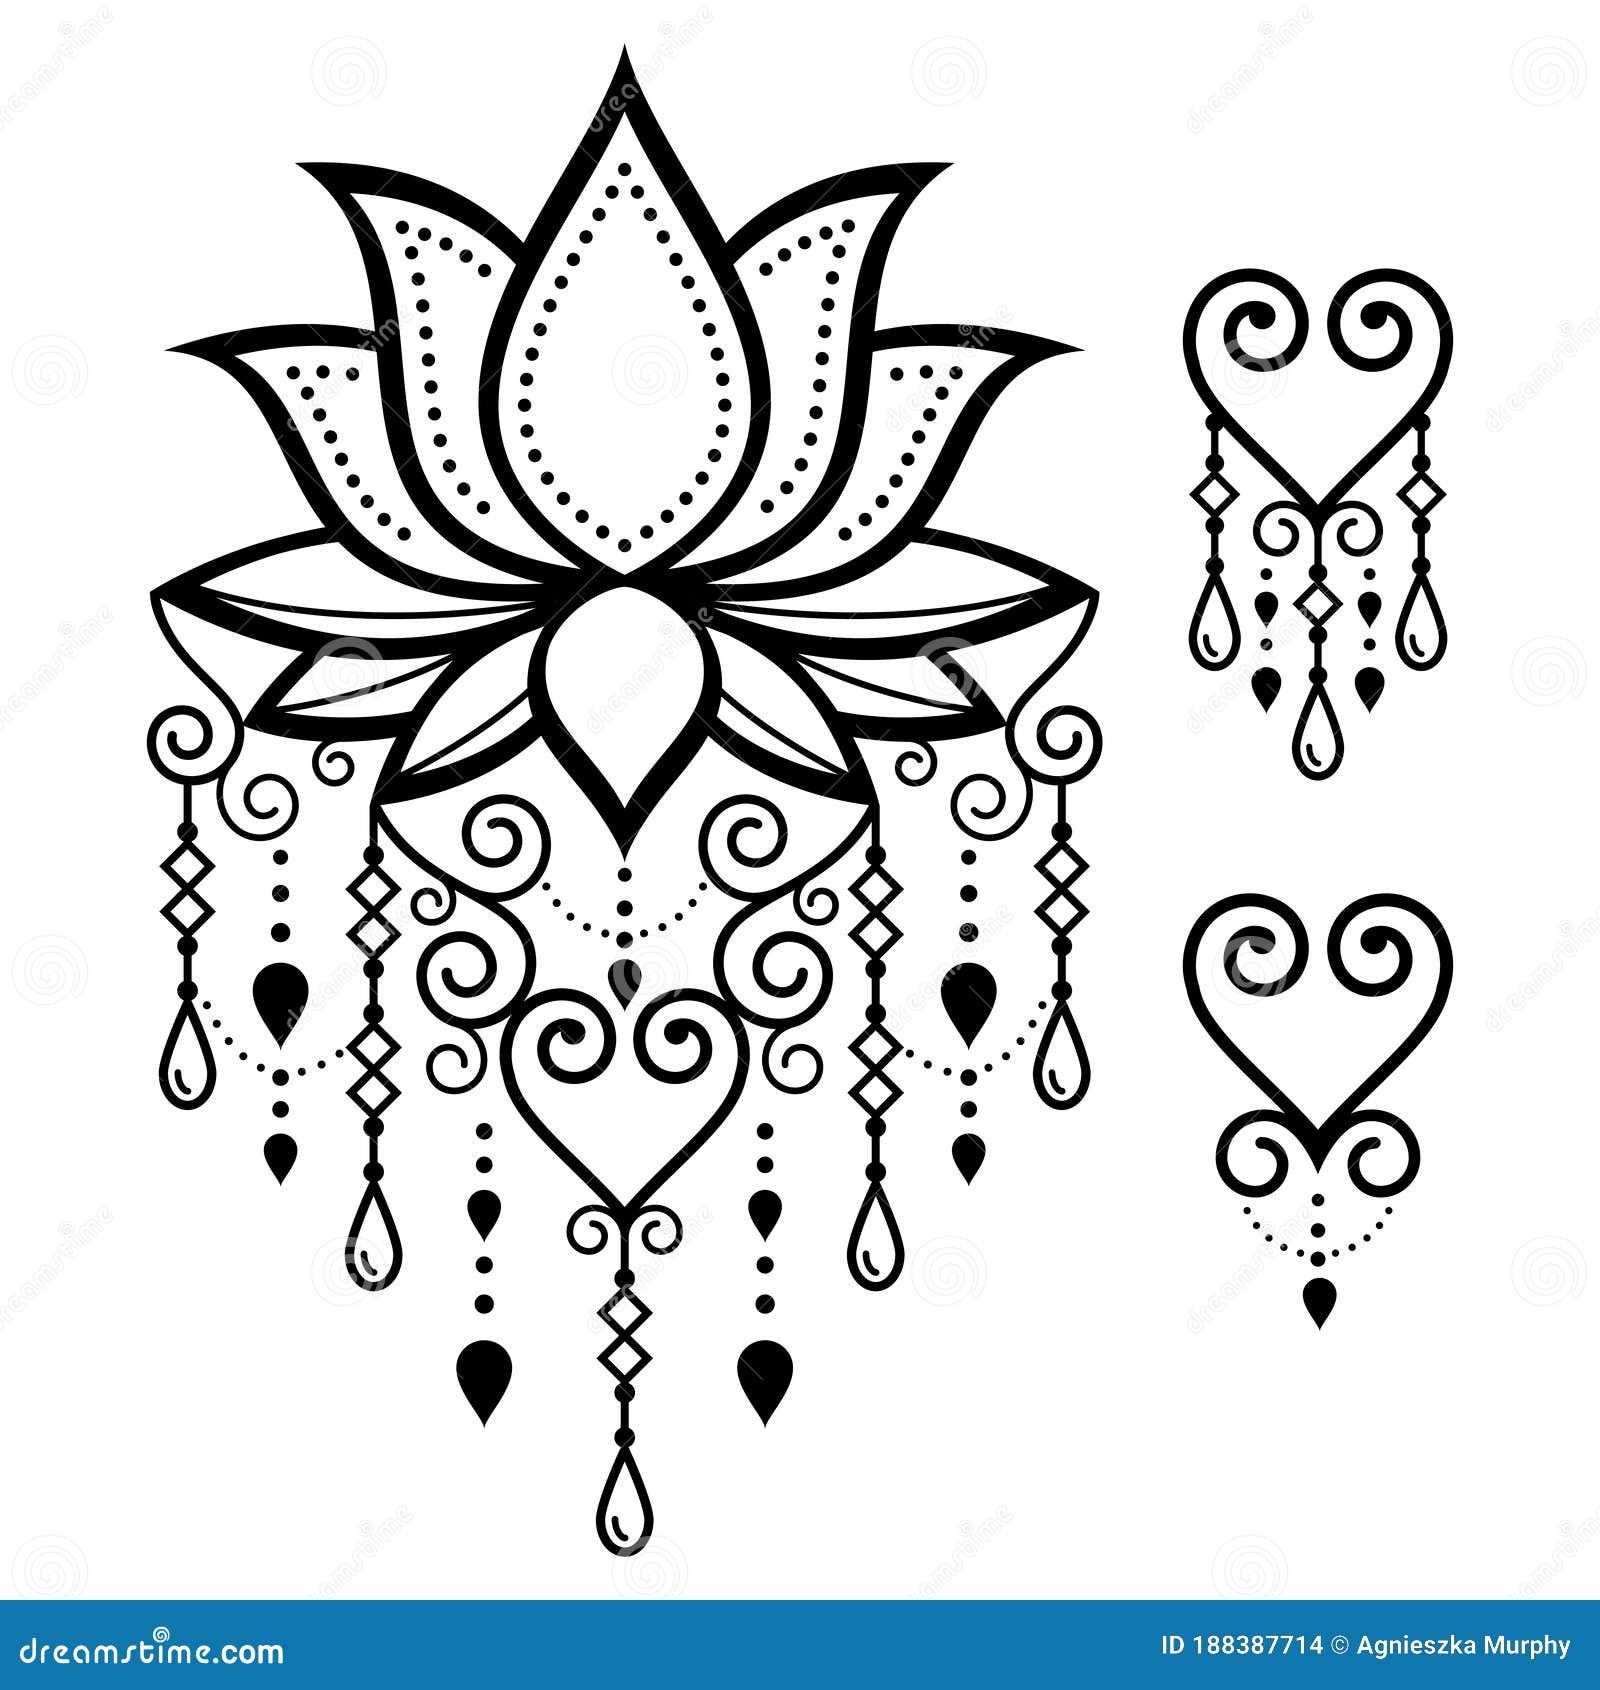 Agrarisch Verdorde Overweldigend Lotus Flower Yoga Vector Design, Mehndi Indian Henna Tattoo Style Pattern,  Boho Lotus Art with Chain, Swirls and Heart Stock Vector - Illustration of  element, india: 188387714